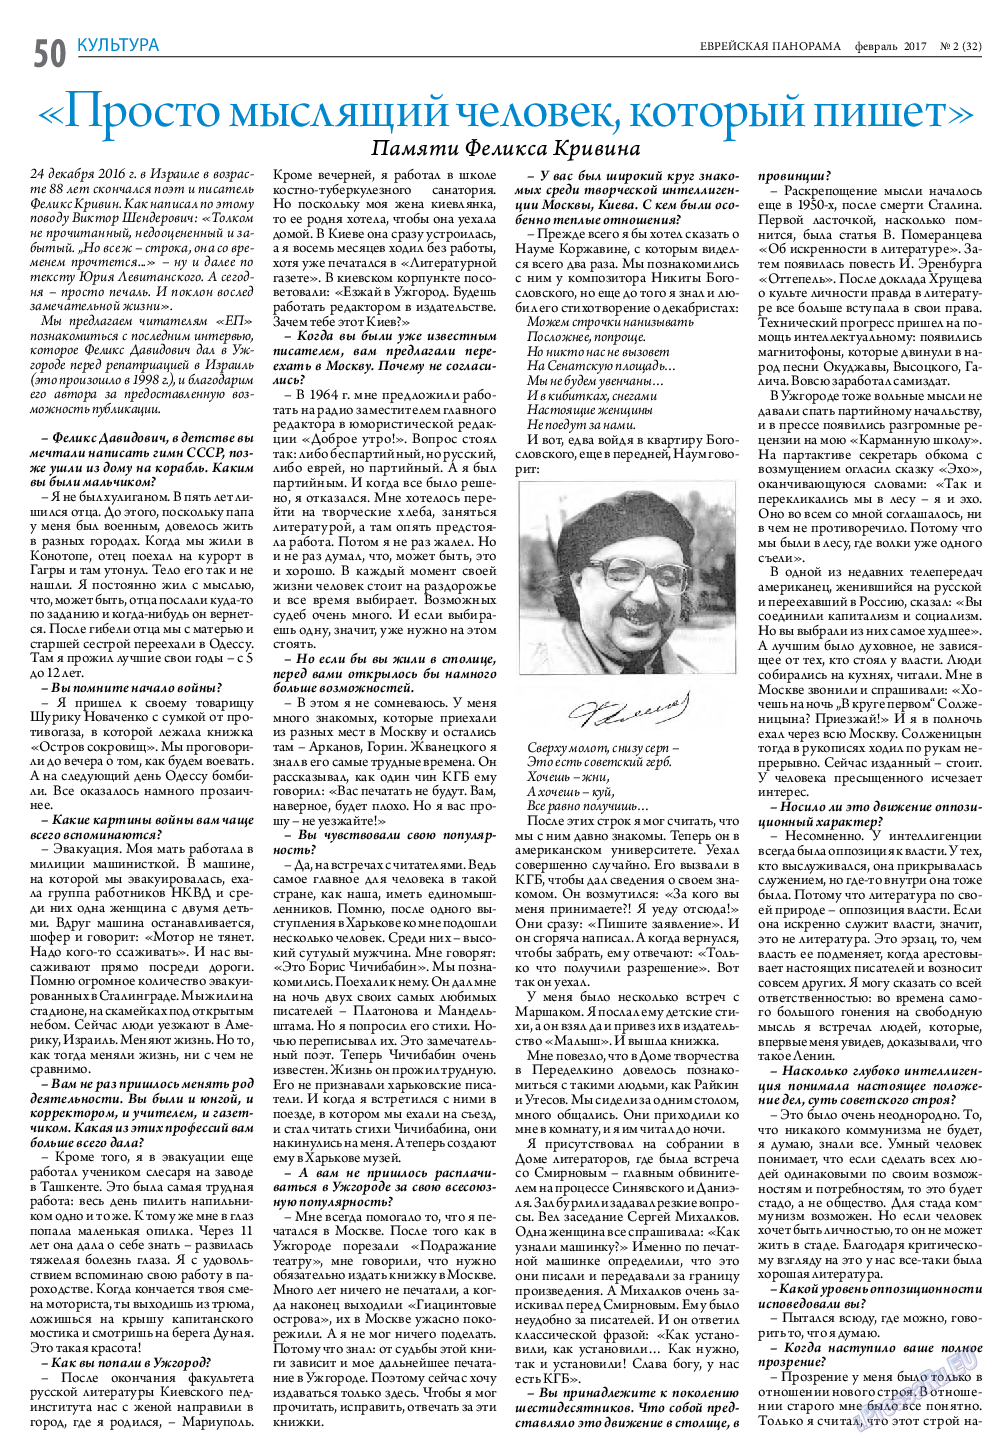 Еврейская панорама, газета. 2017 №2 стр.50